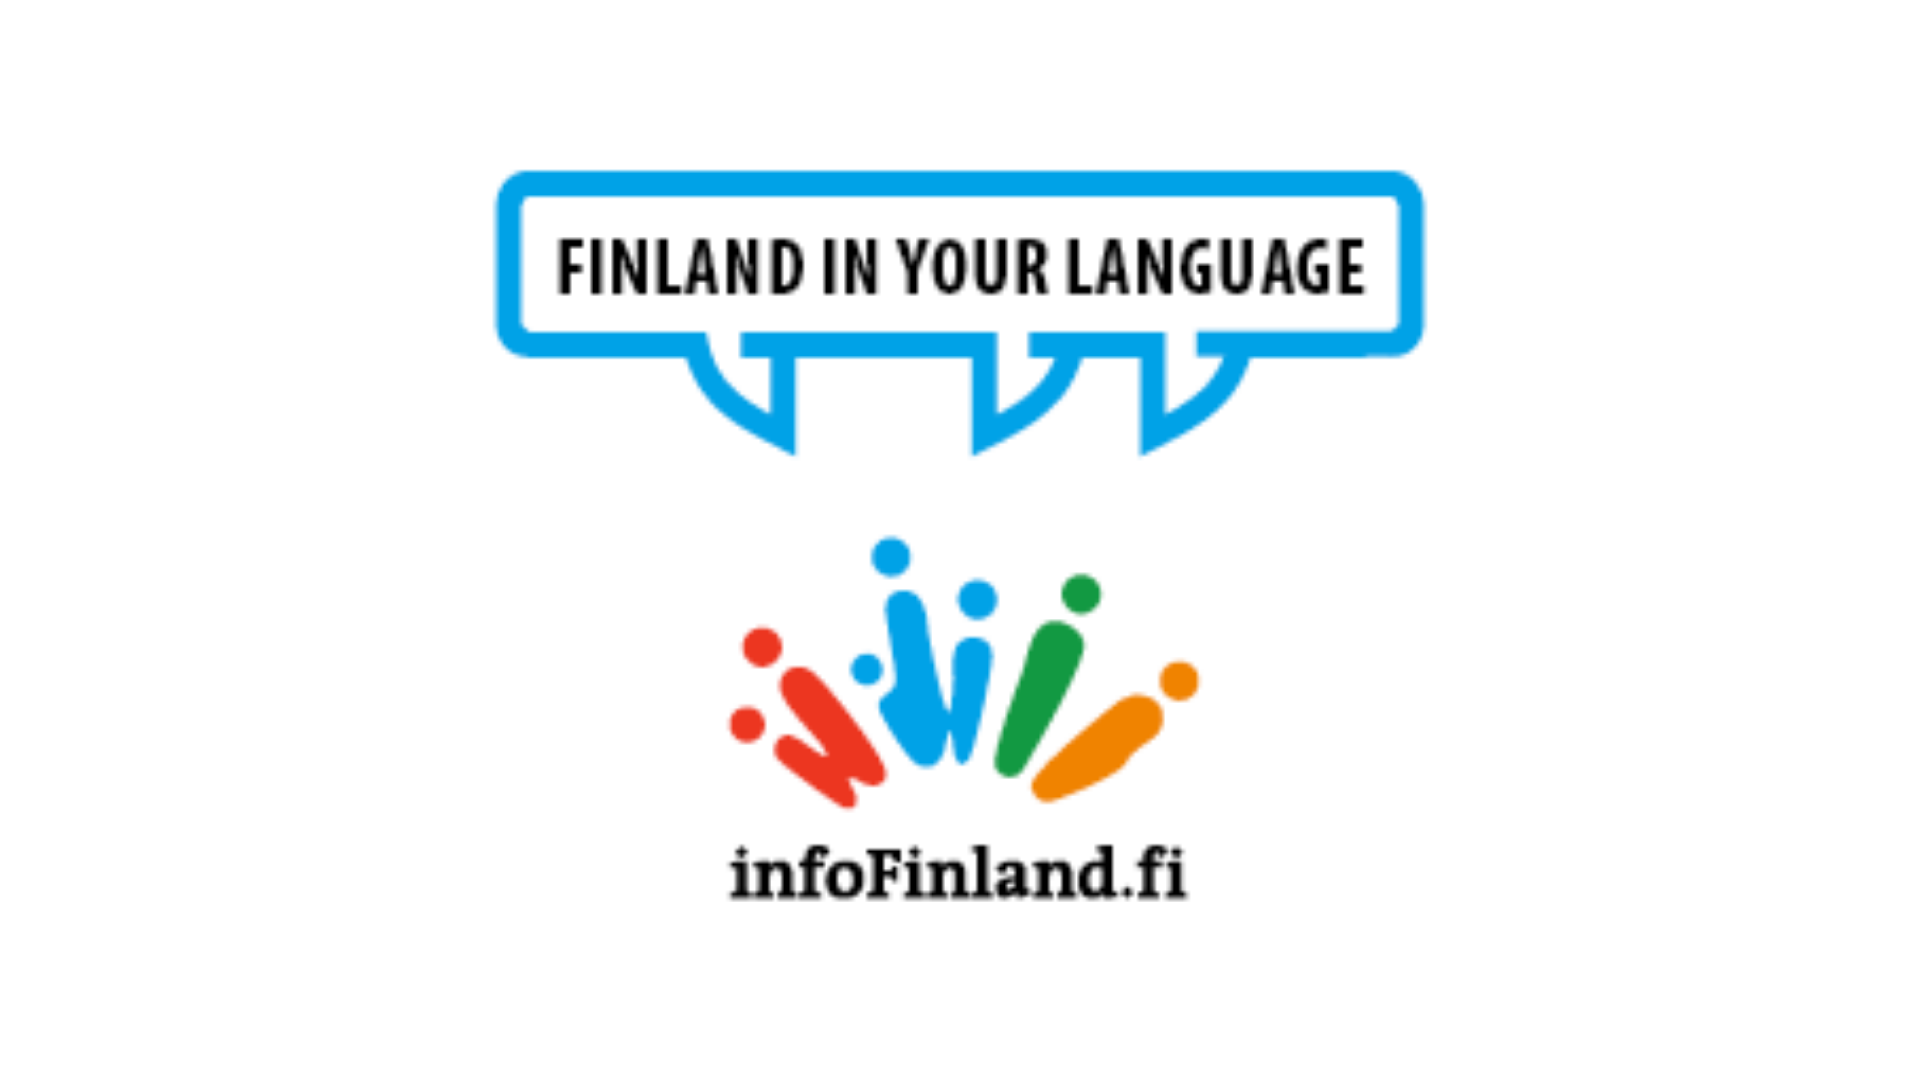  Infofinland.fi:n logo 